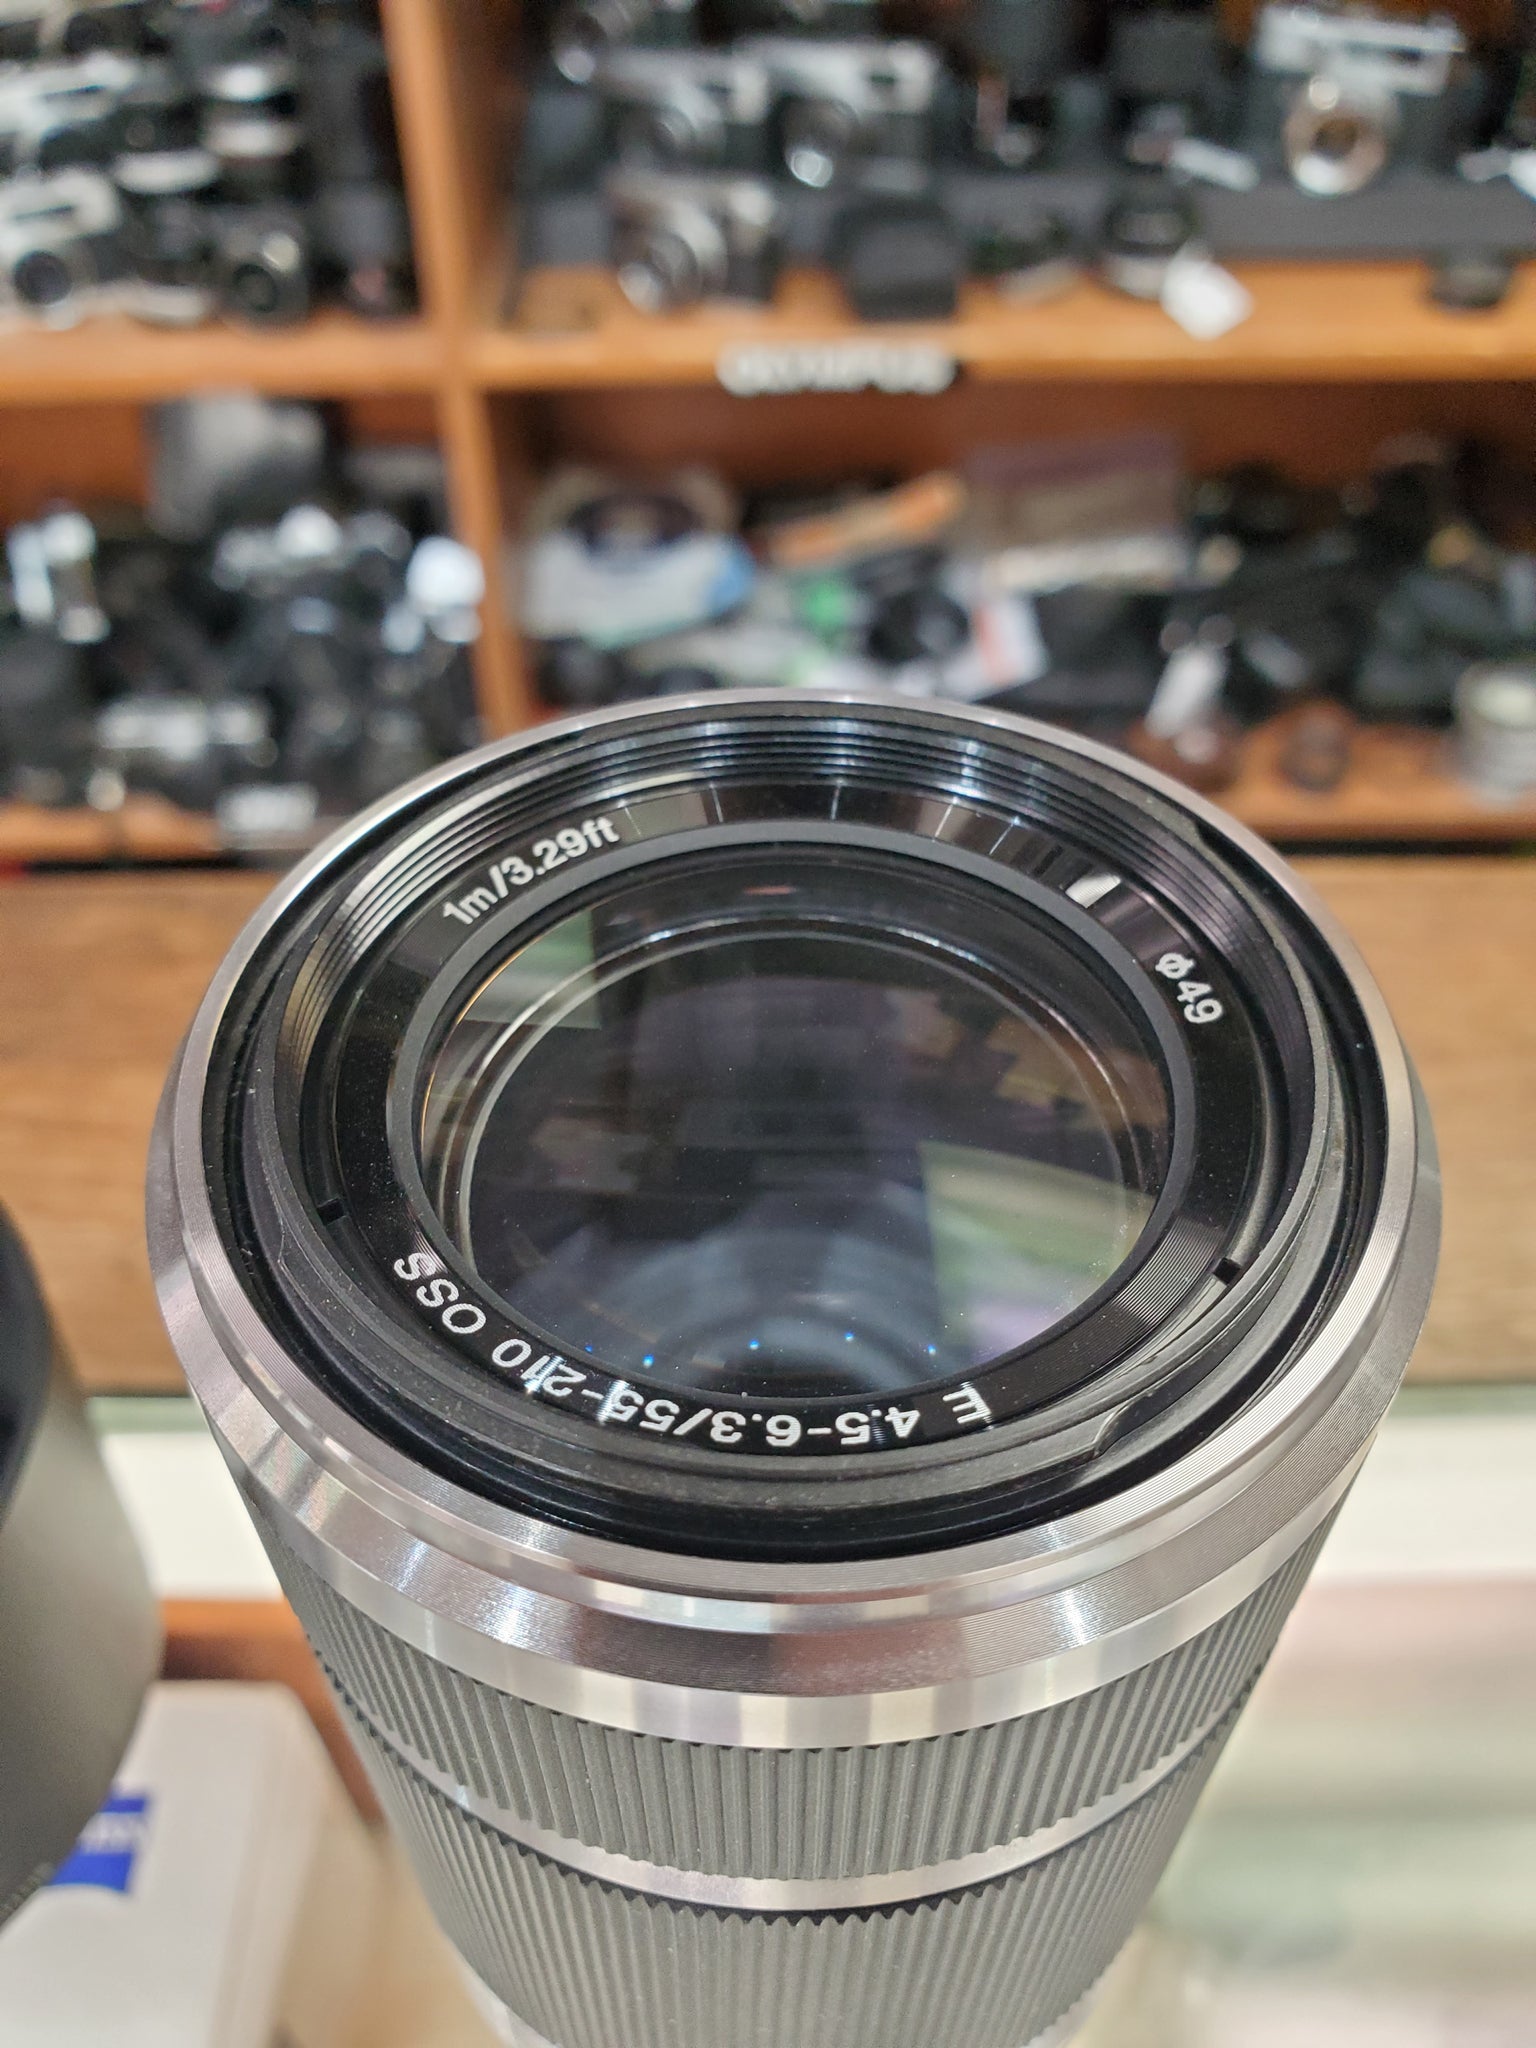 Sony E 55-210mm F4.5-6.3 OSS Lens Lens - Used Condition 9.5/10